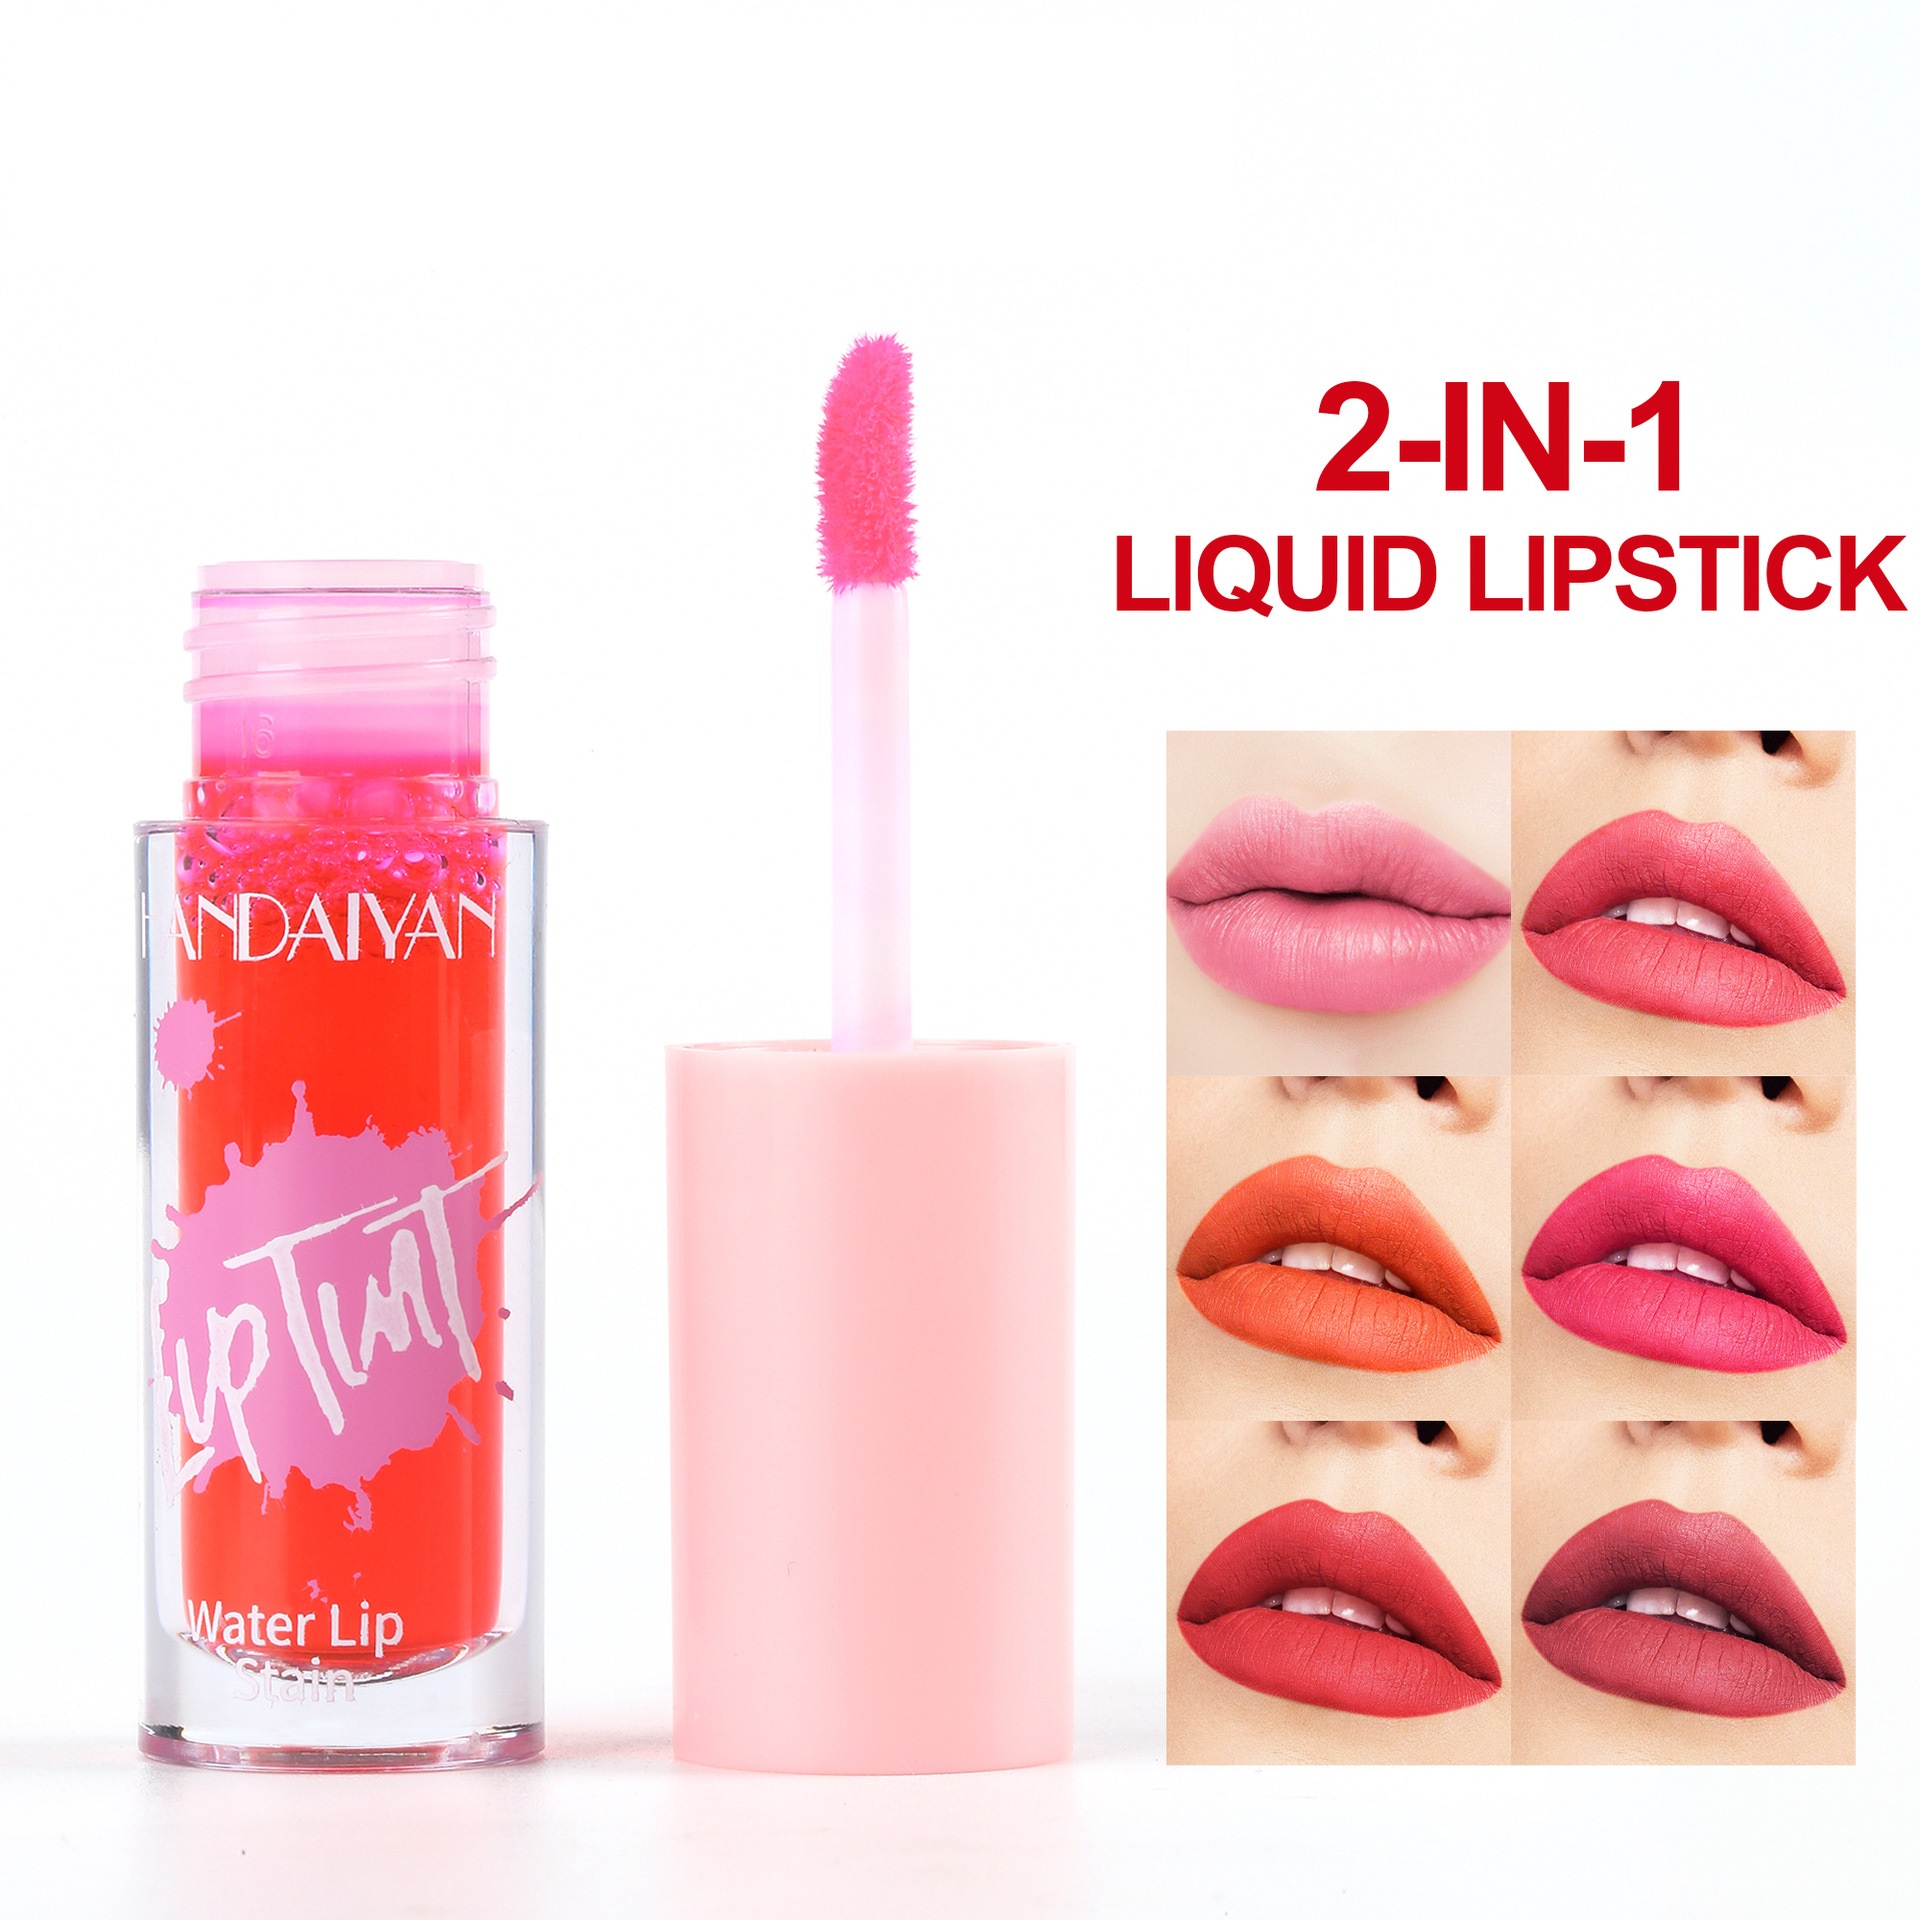 HANDAIYAN 2 I 1 Liquid Lipstick Long Last Hydrating Water Lip Tint Glaze Moisturizer Watertproof Non-Sticky Easy To Wear Luxury Makeup Lipsticks